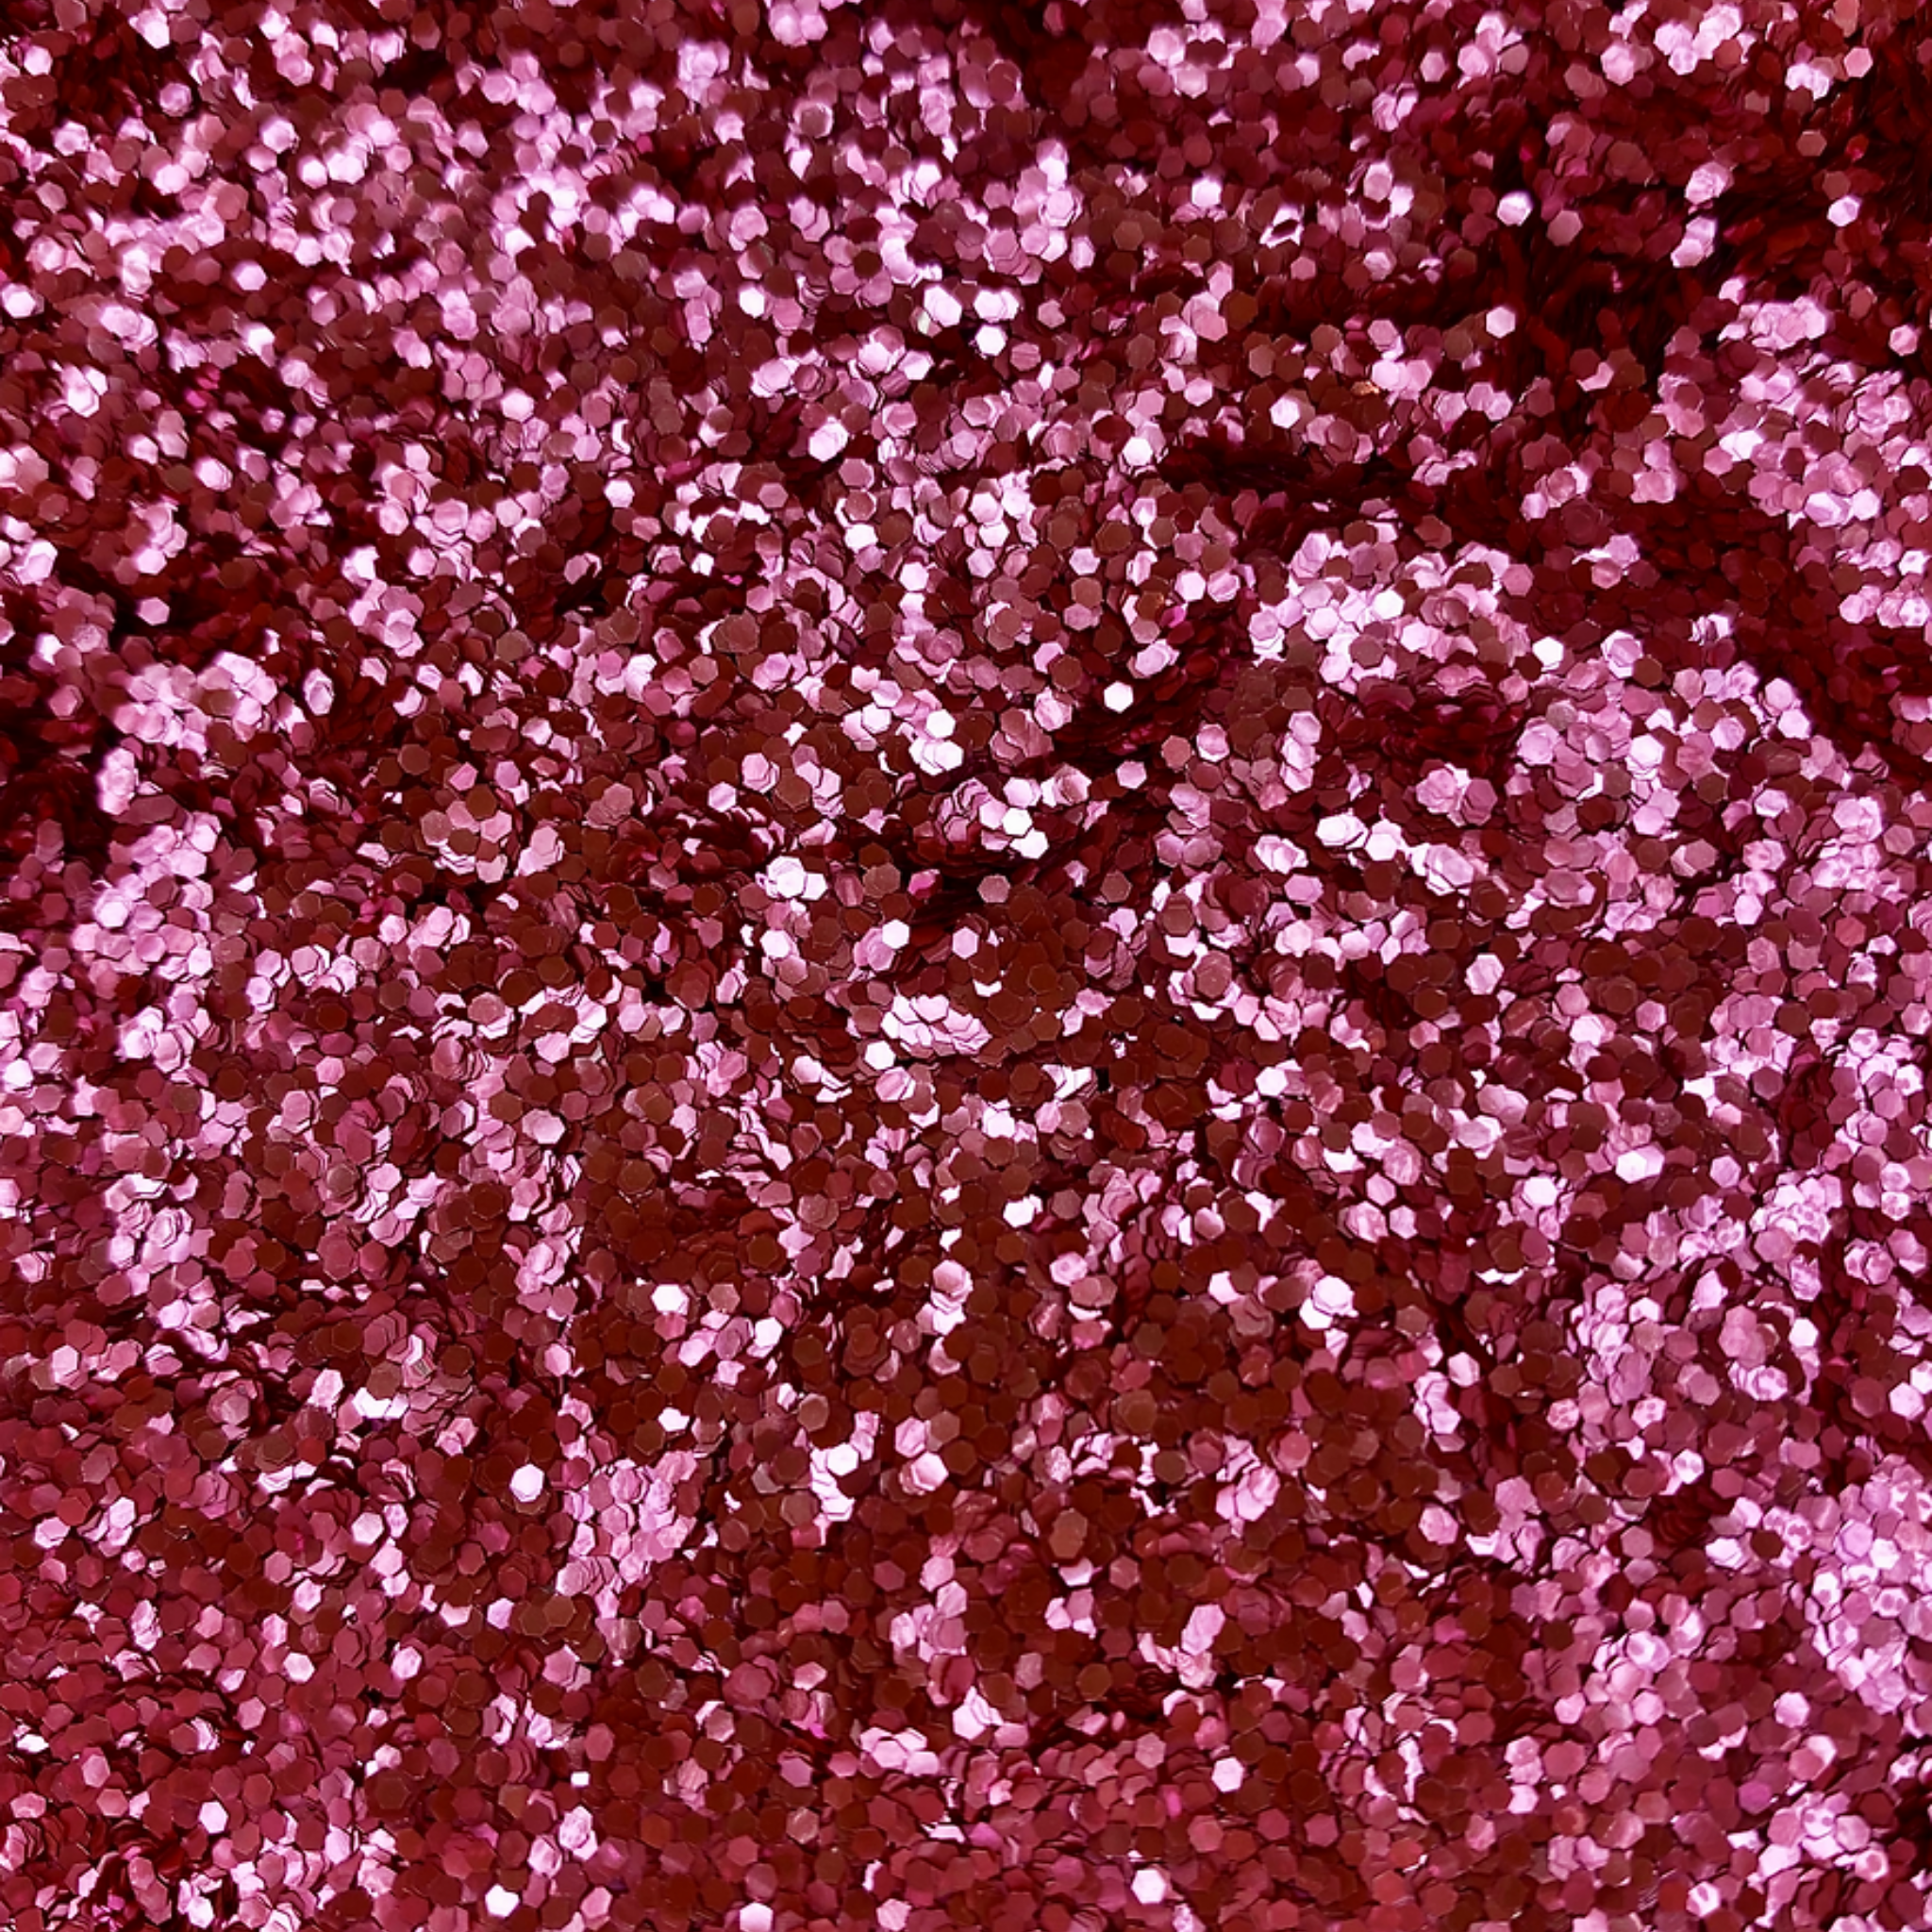 Pink chunky eco glitter by Luminosity Glitter